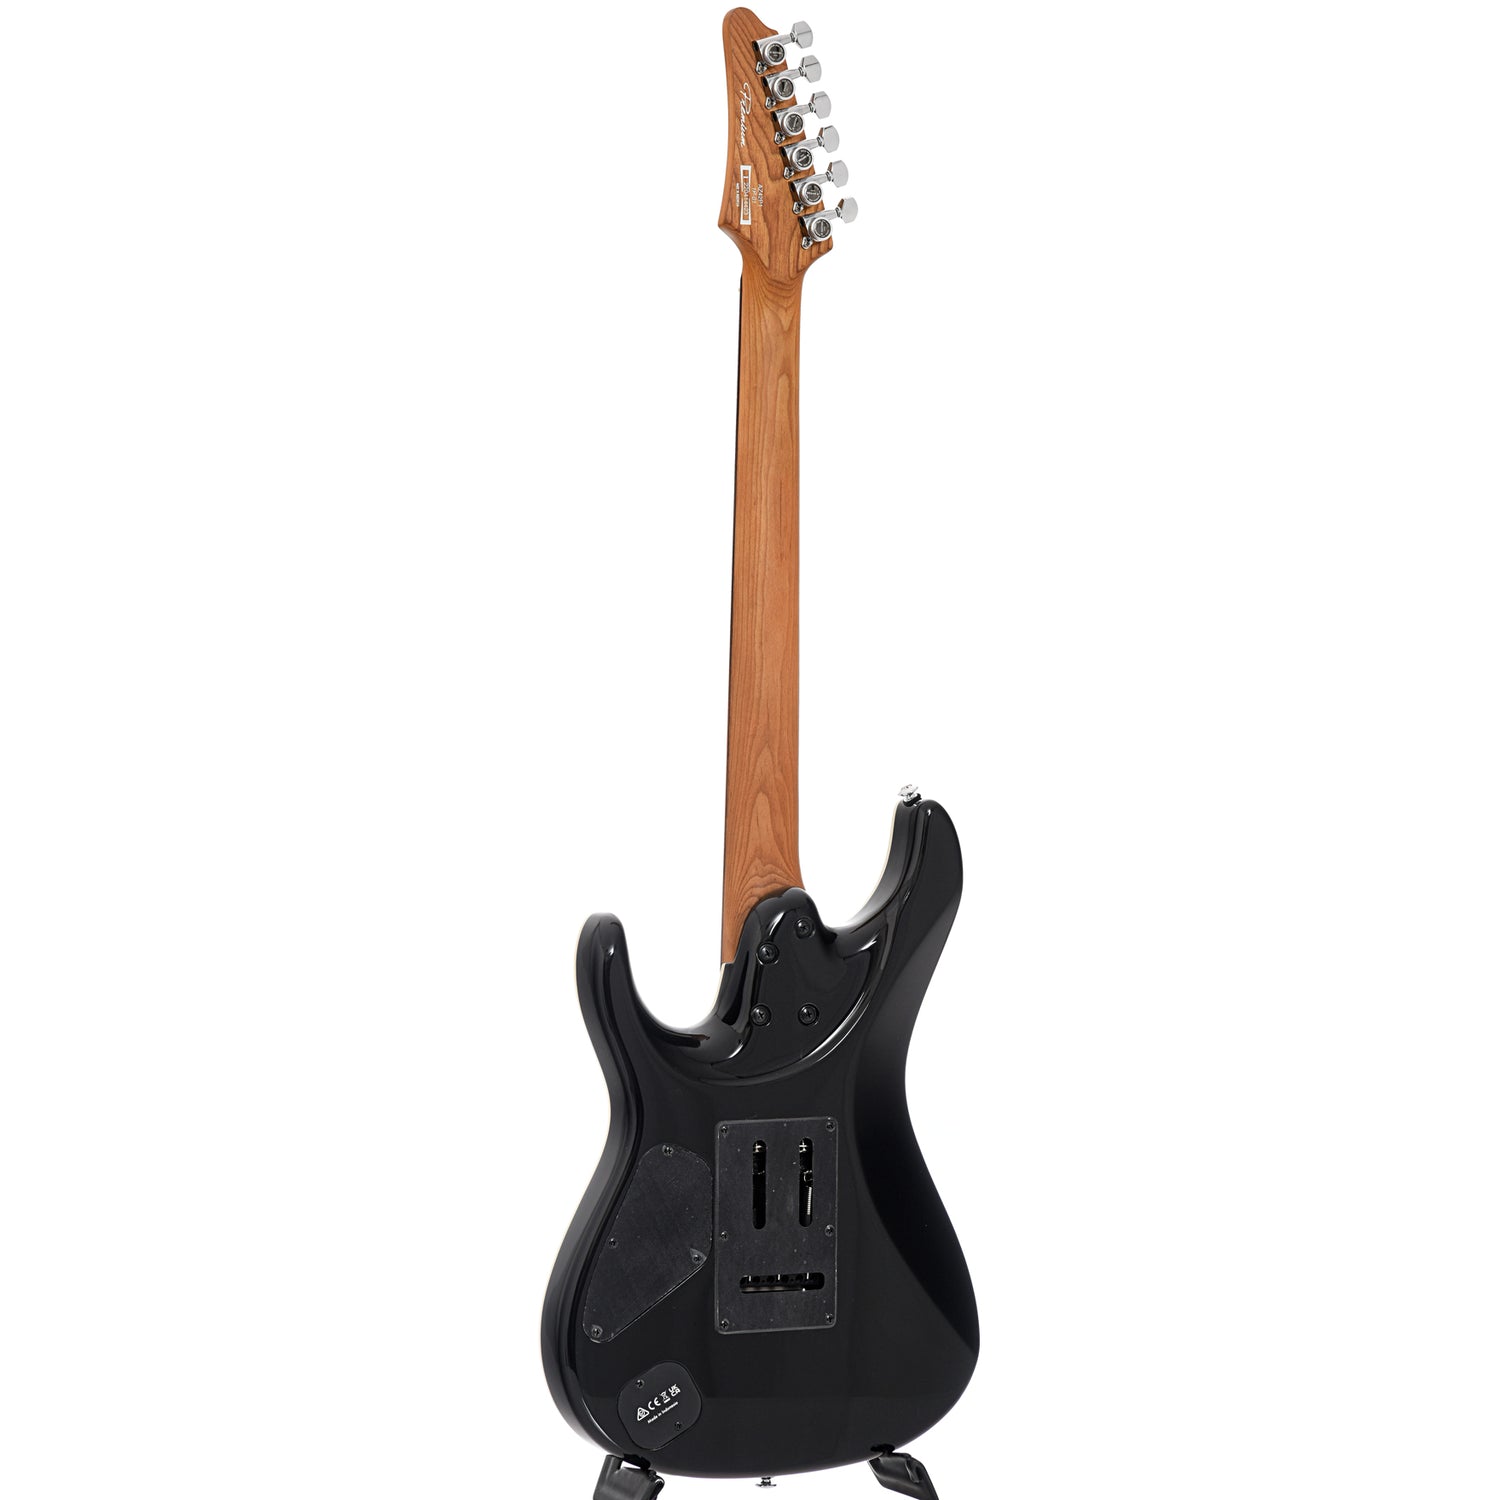 Full back and side of Ibanez Premium AZ42P1 Electric Guitar, Black